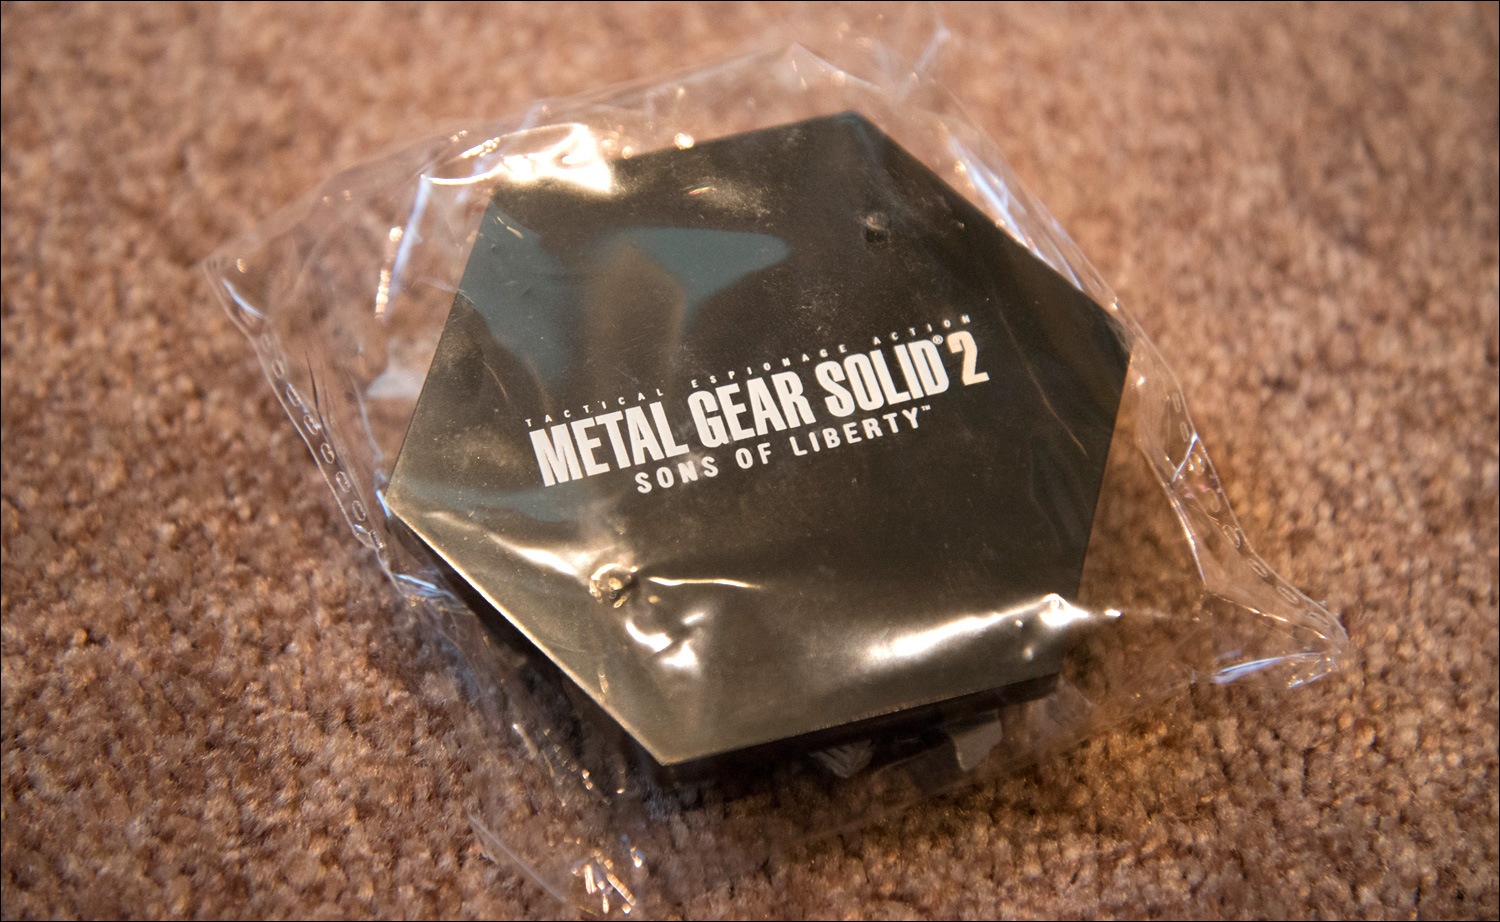 Metal-Gear-Solid-2-Sons-of-Liberty-Premium-Package-Snake-Figure-Pedestal